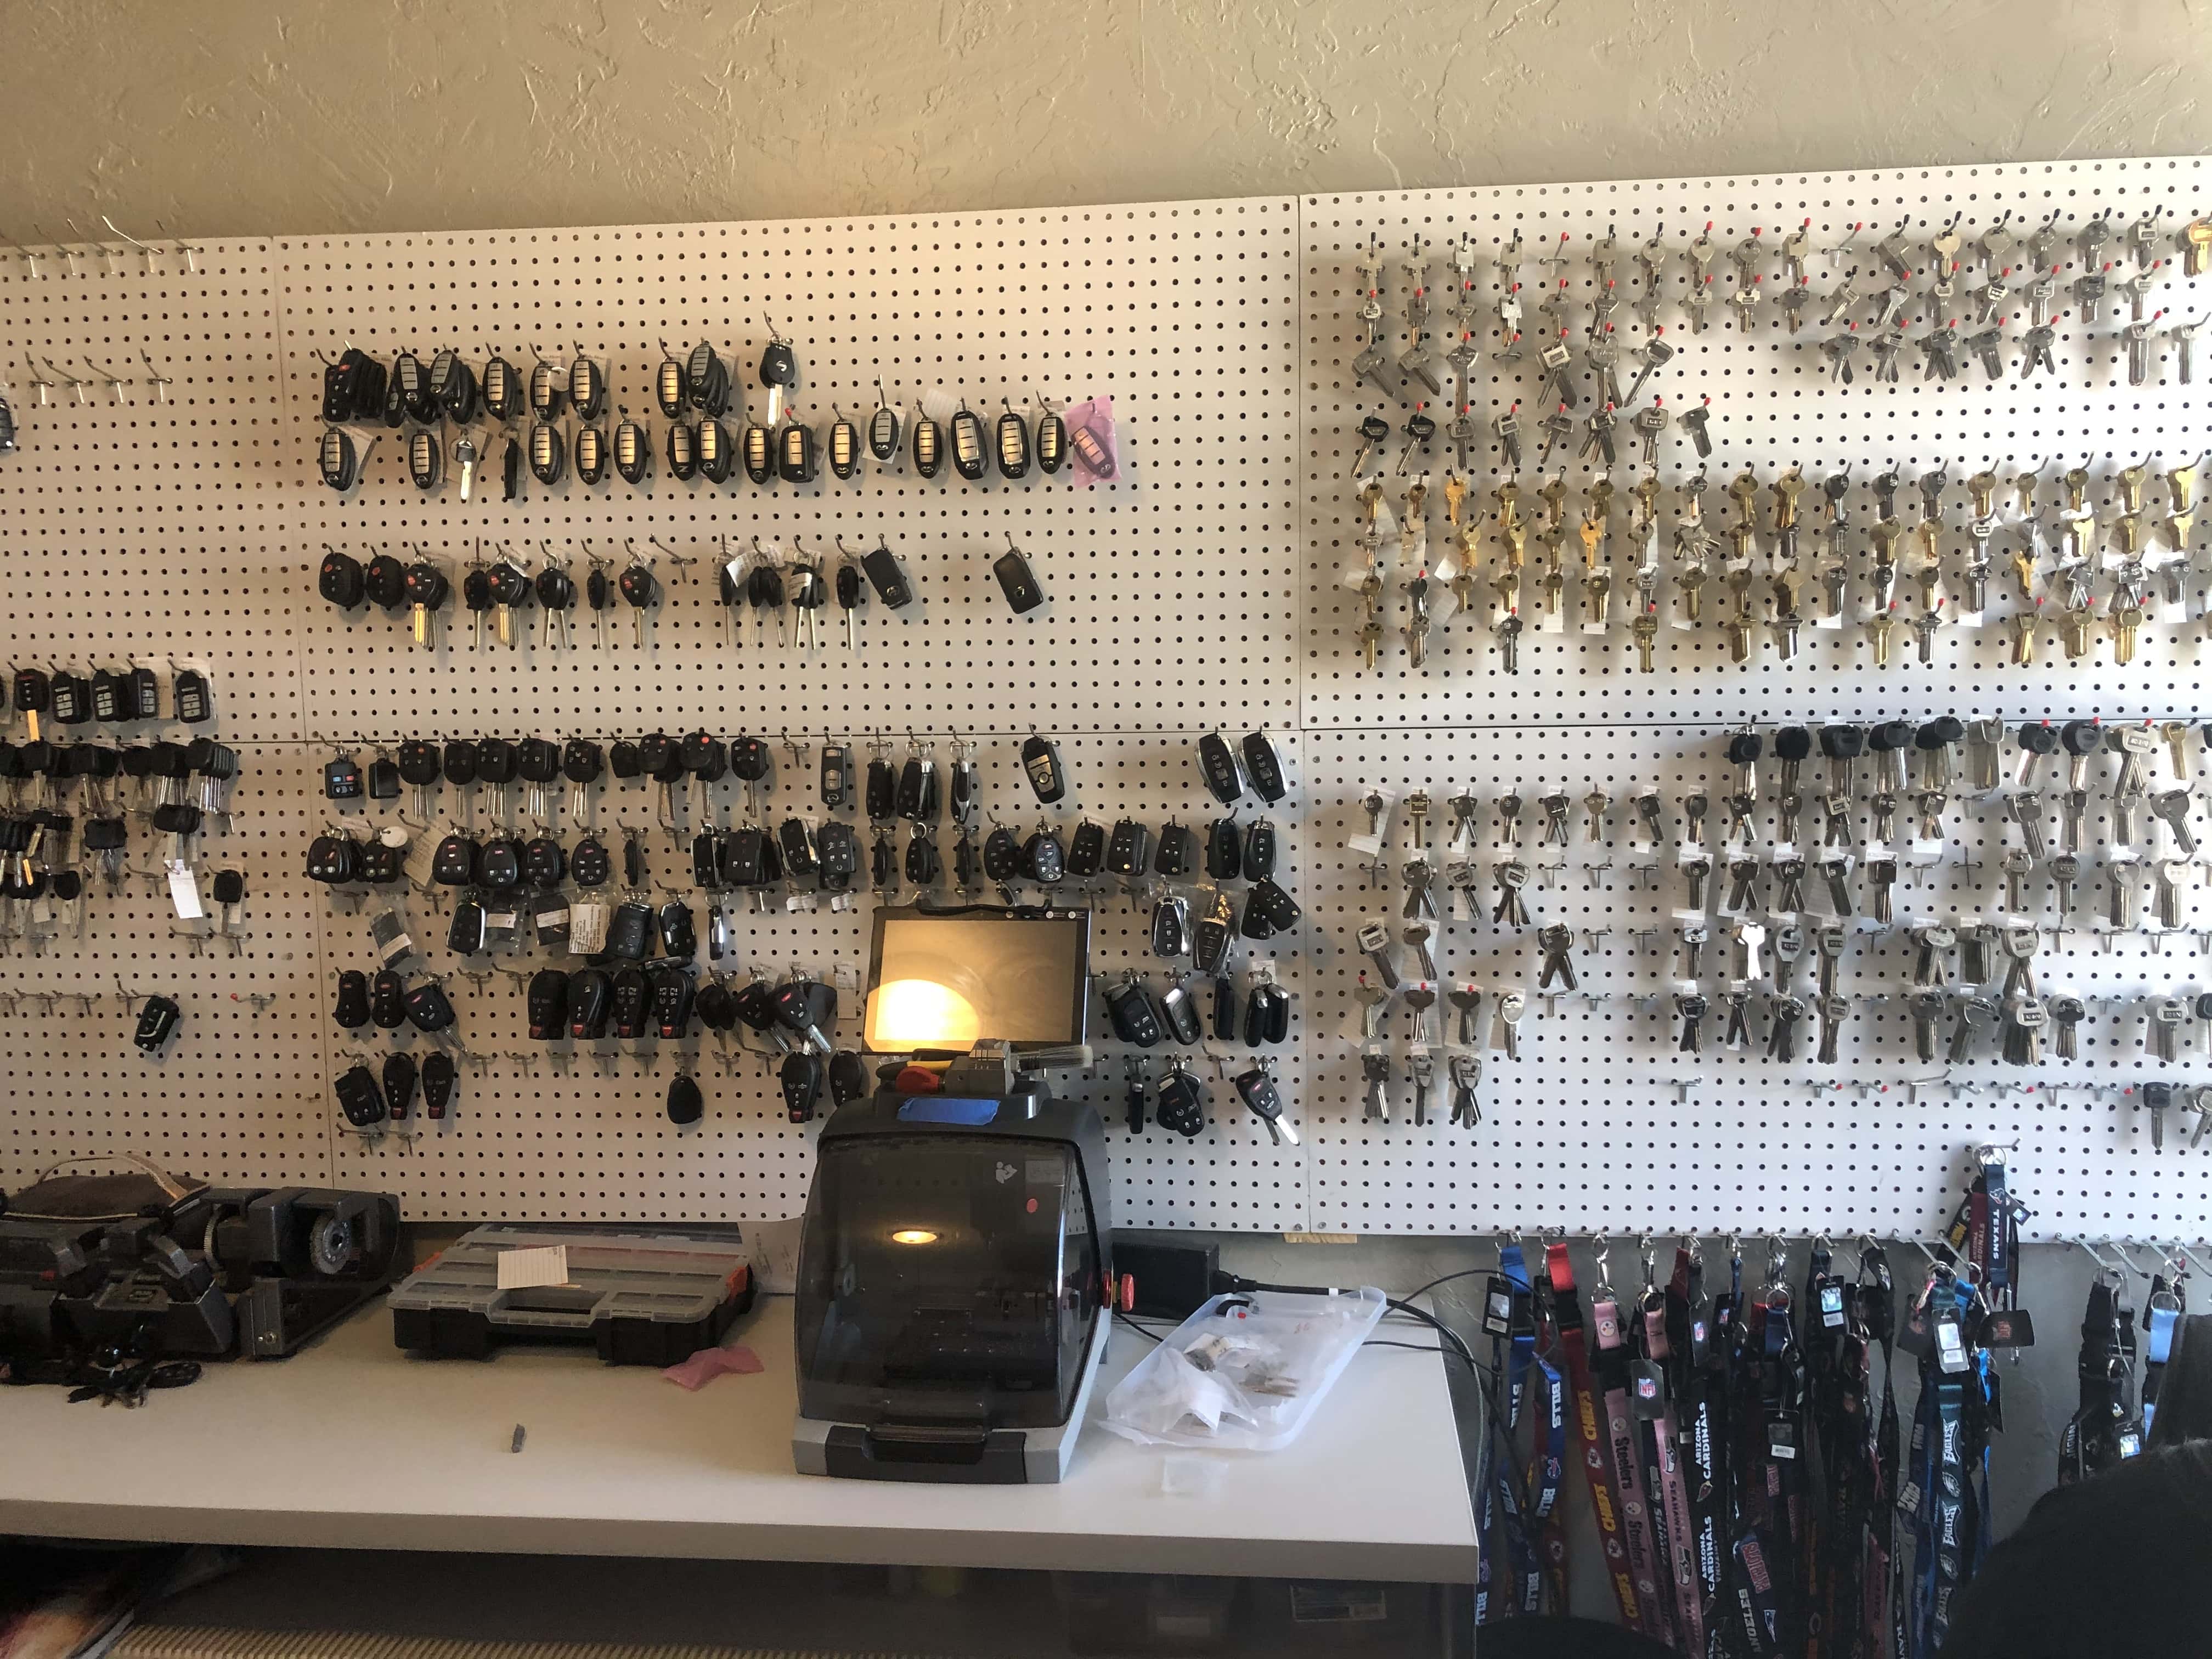 Pauls Keys and remotes - Amarillo, TX, US, lost car key replacement